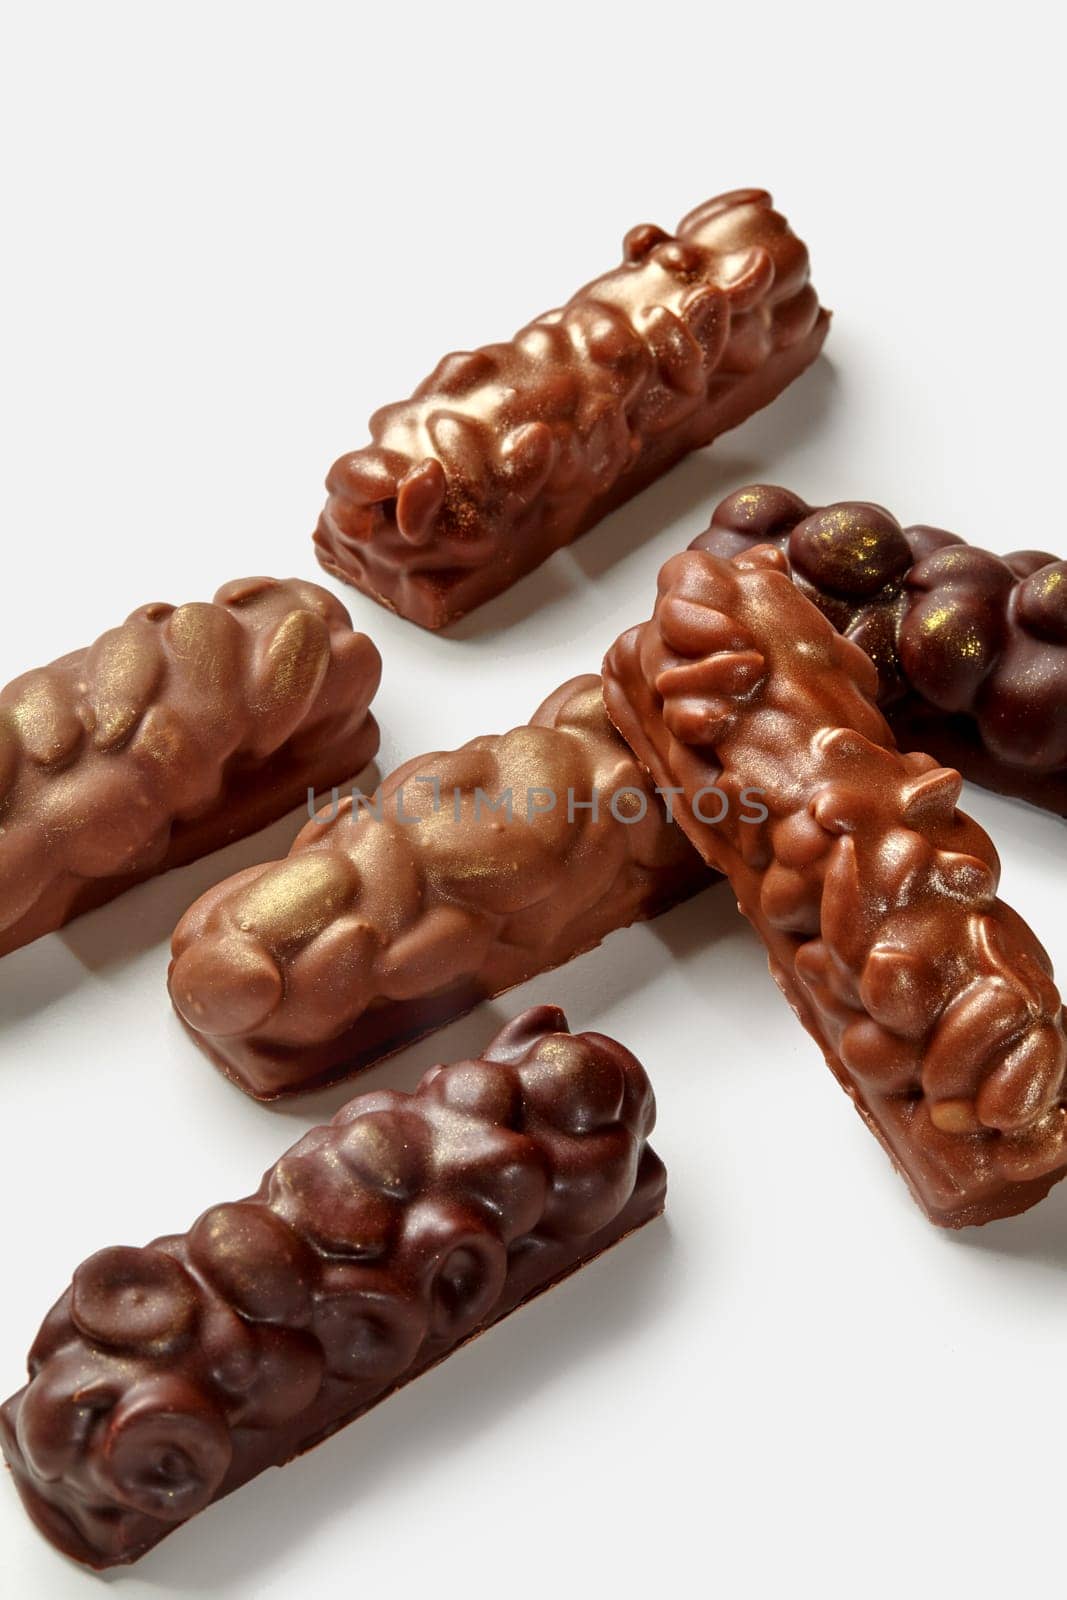 Variety of milk and dark chocolate bars with nuts on white by nazarovsergey